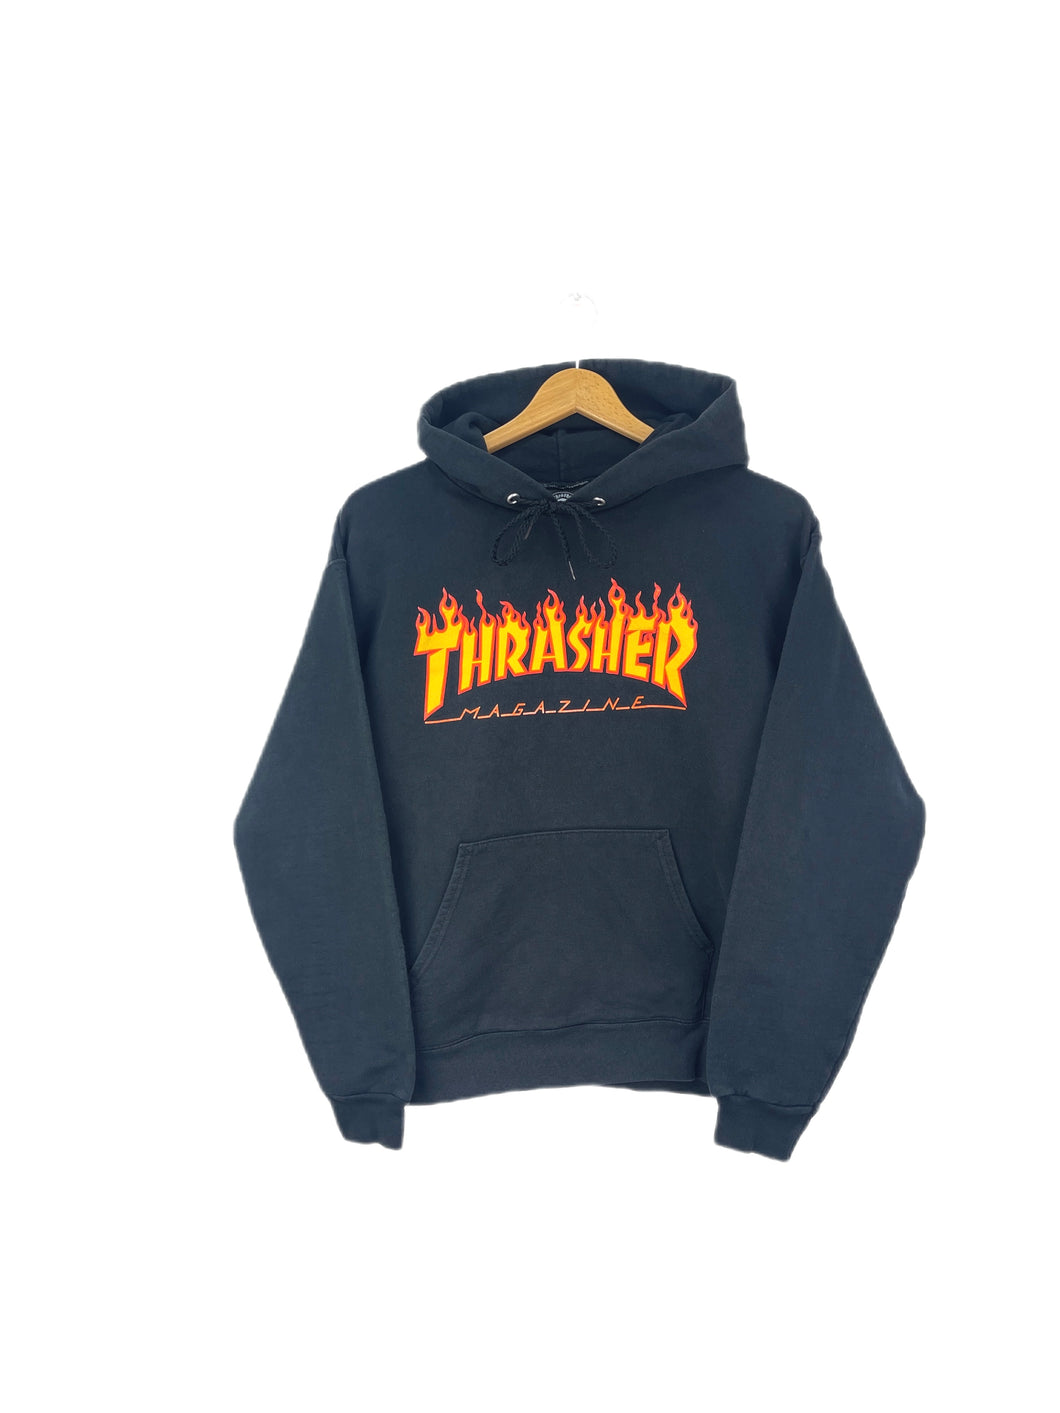 Thrasher Sweatshirt - Small